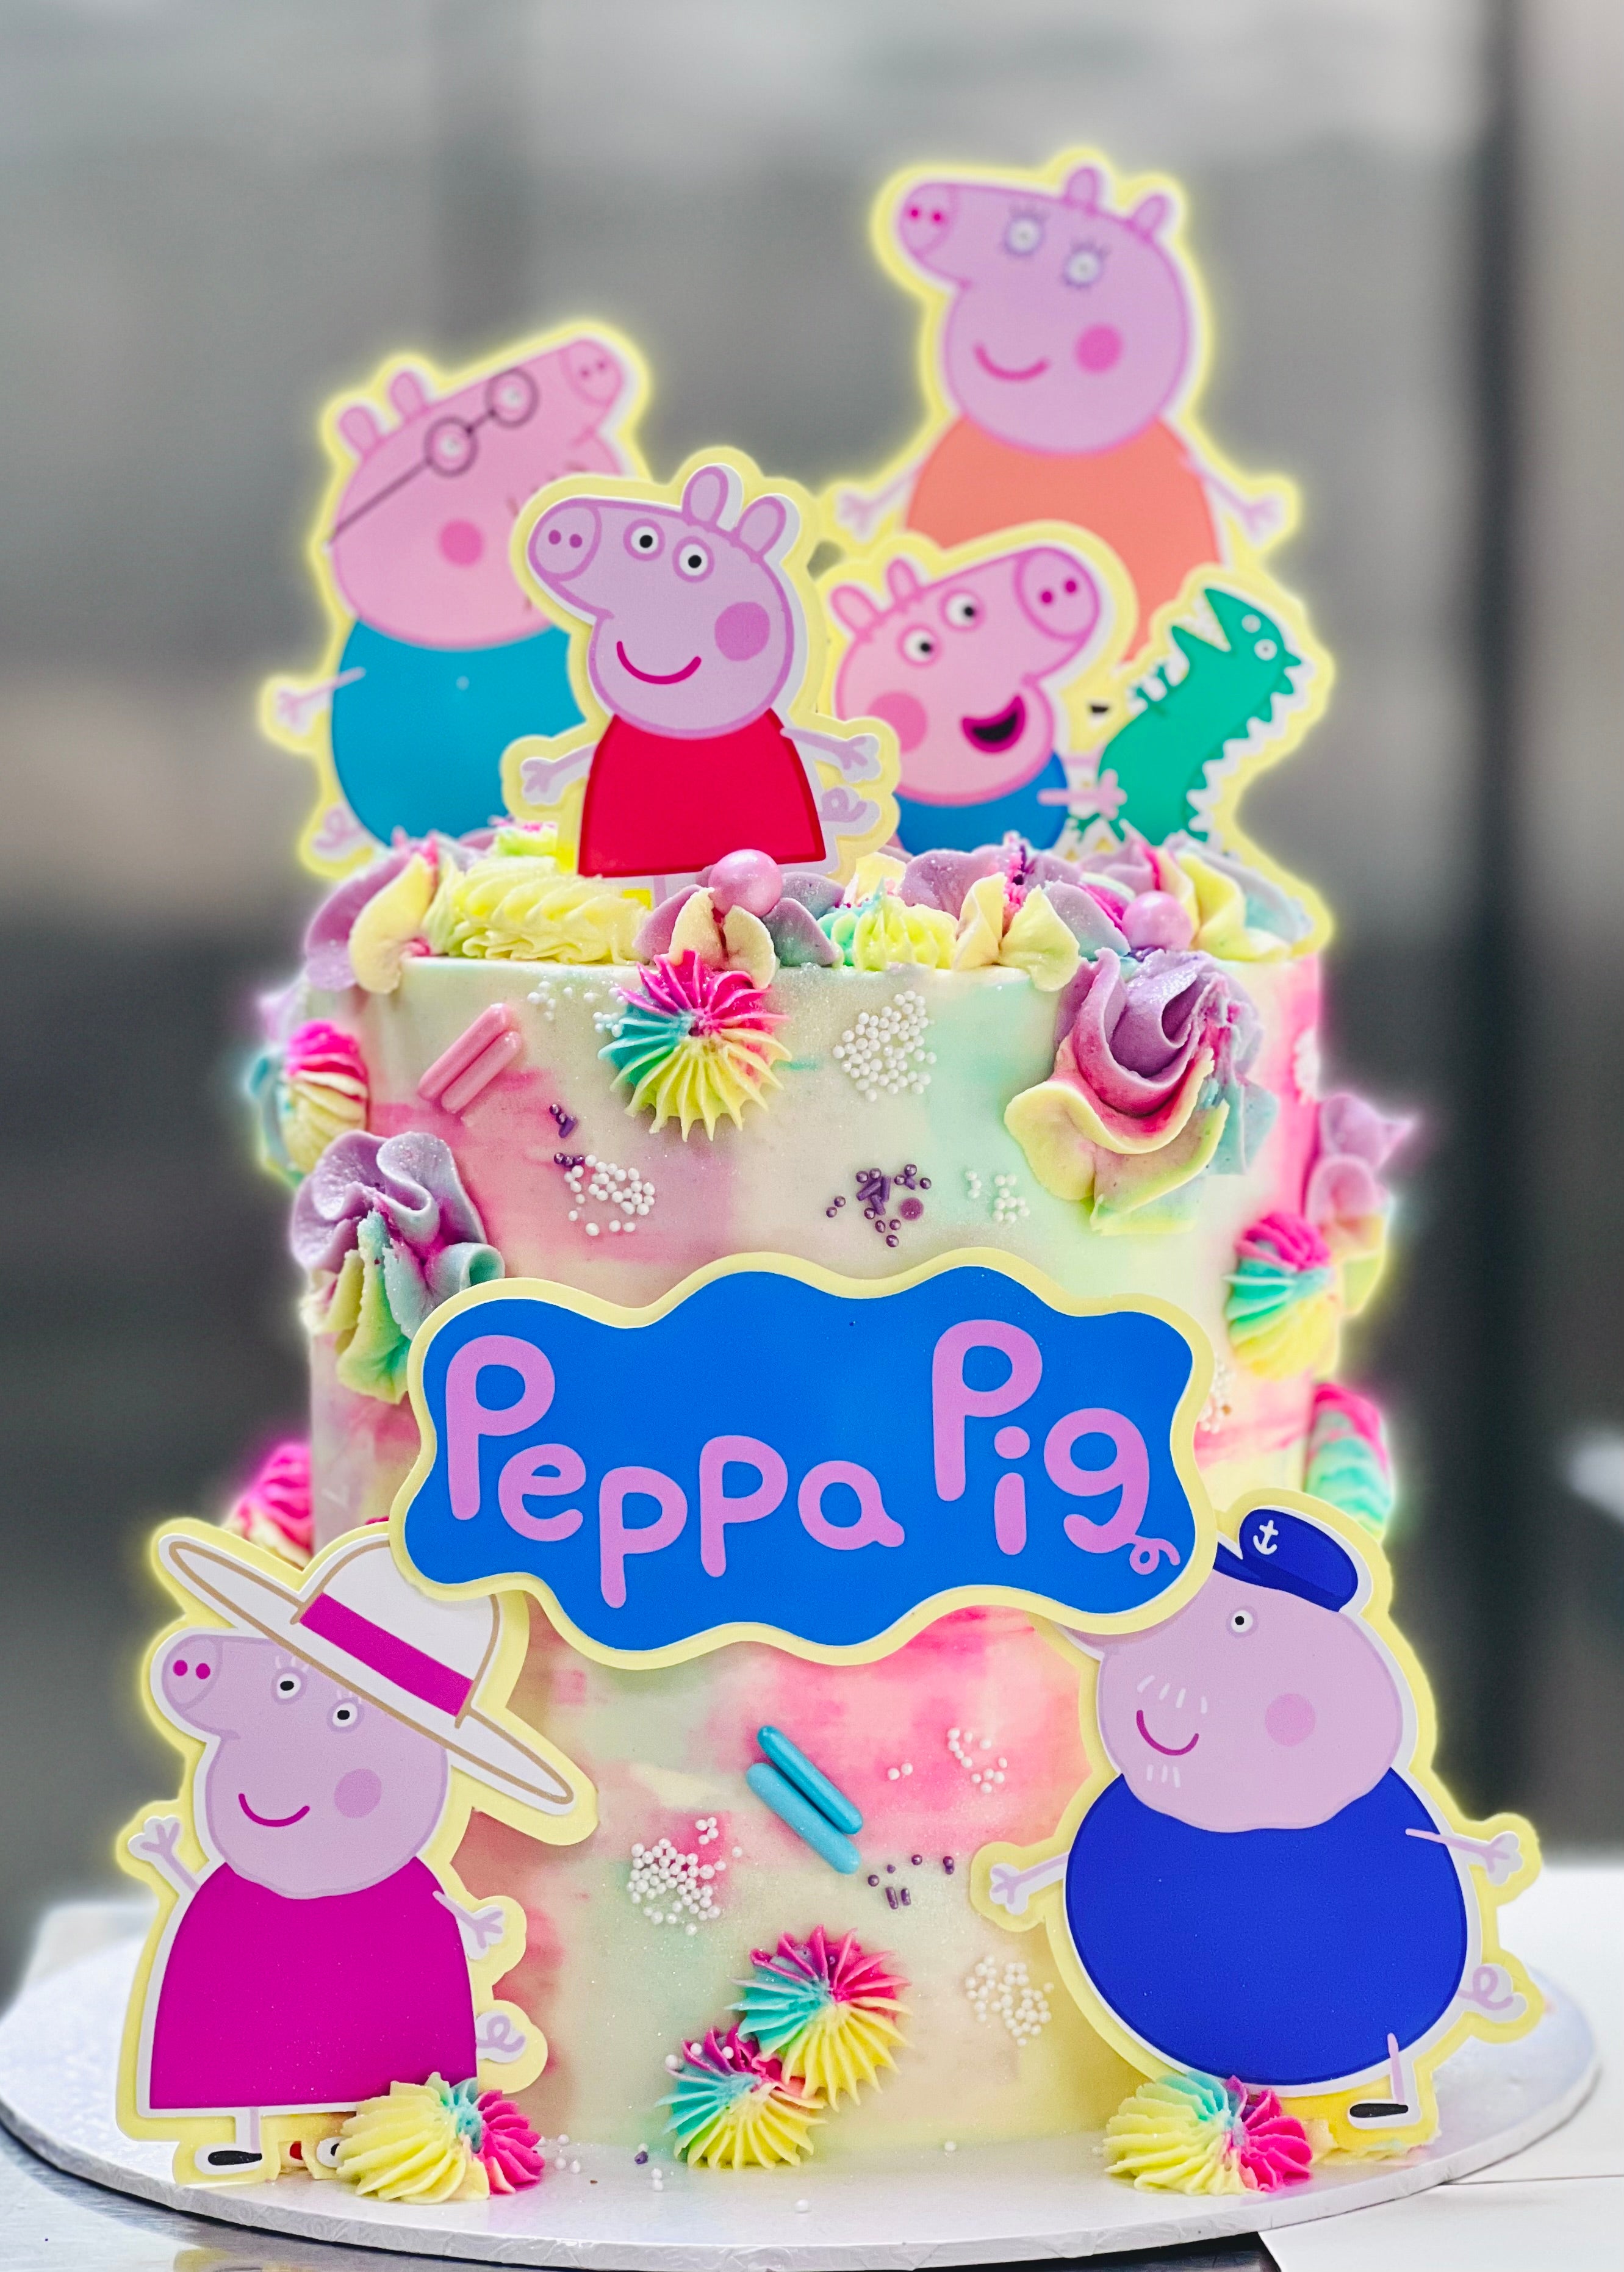 The Best Peppa Pig cakes in Gurgaon | Gurgaon Bakers